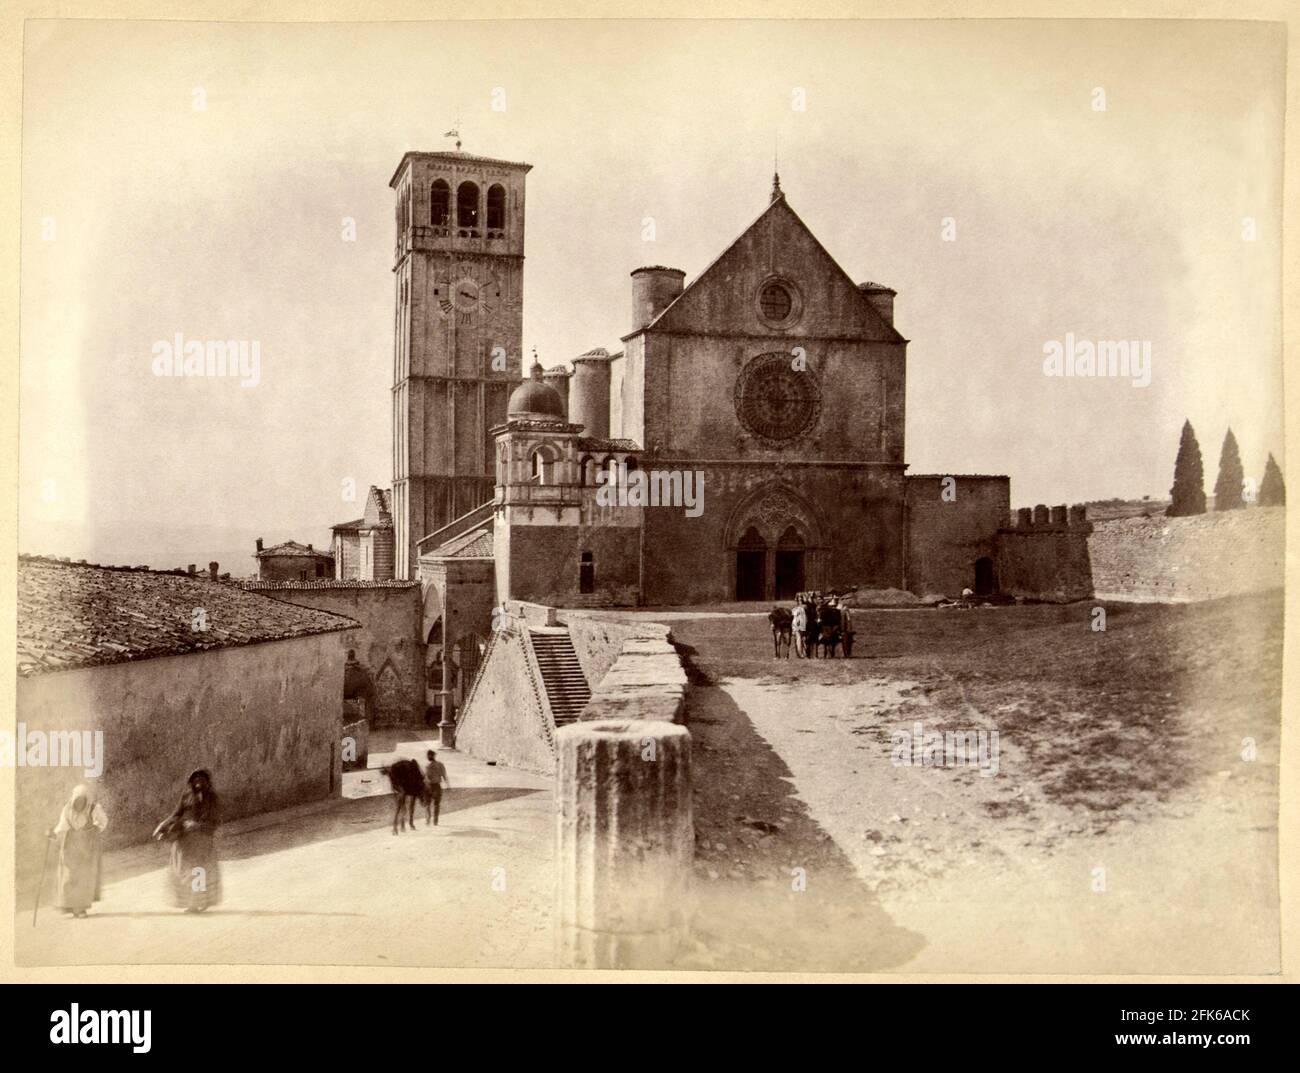 1886 ca , ASSISI , UMBRIA , ITALY : View of the Basilica of San Francesco . Photo by american journalist and photographer WILLIAM JAMES STILLMAN ( 1828 - 1901 ). - ITALIA - FOTO STORICHE - HISTORY - GEOGRAFIA - GEOGRAPHY - ARCHITETTURA - ARCHITETTURE  - CHURCH - CHIESA - RELIGIONE CATTOLICA - CATHOLIC RELIGION  ---  Archivio GBB Stock Photo